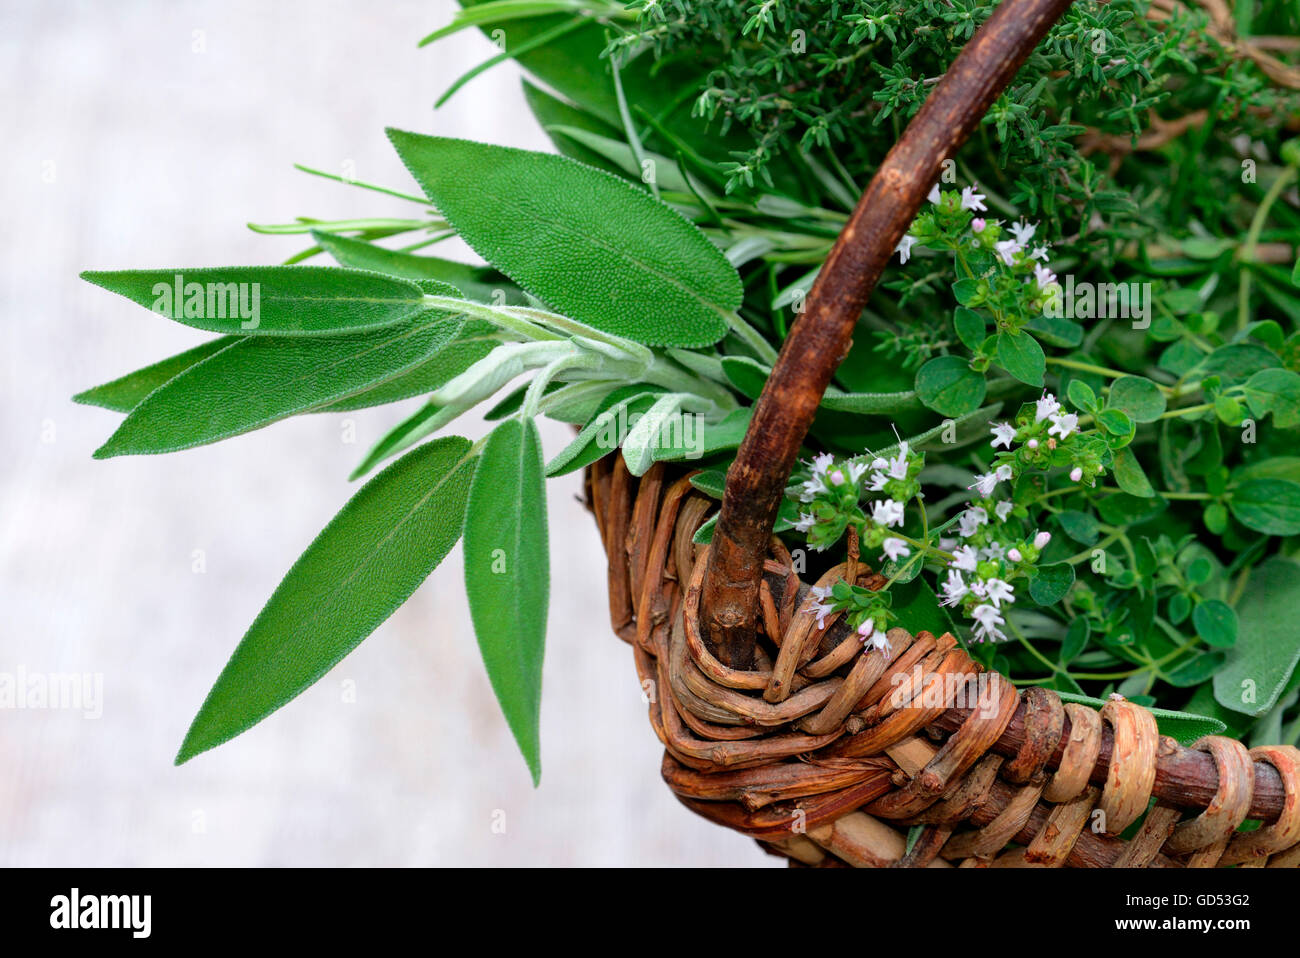 Basket with kitchen herbs, sage, rosemary, oregano, thyme Stock Photo